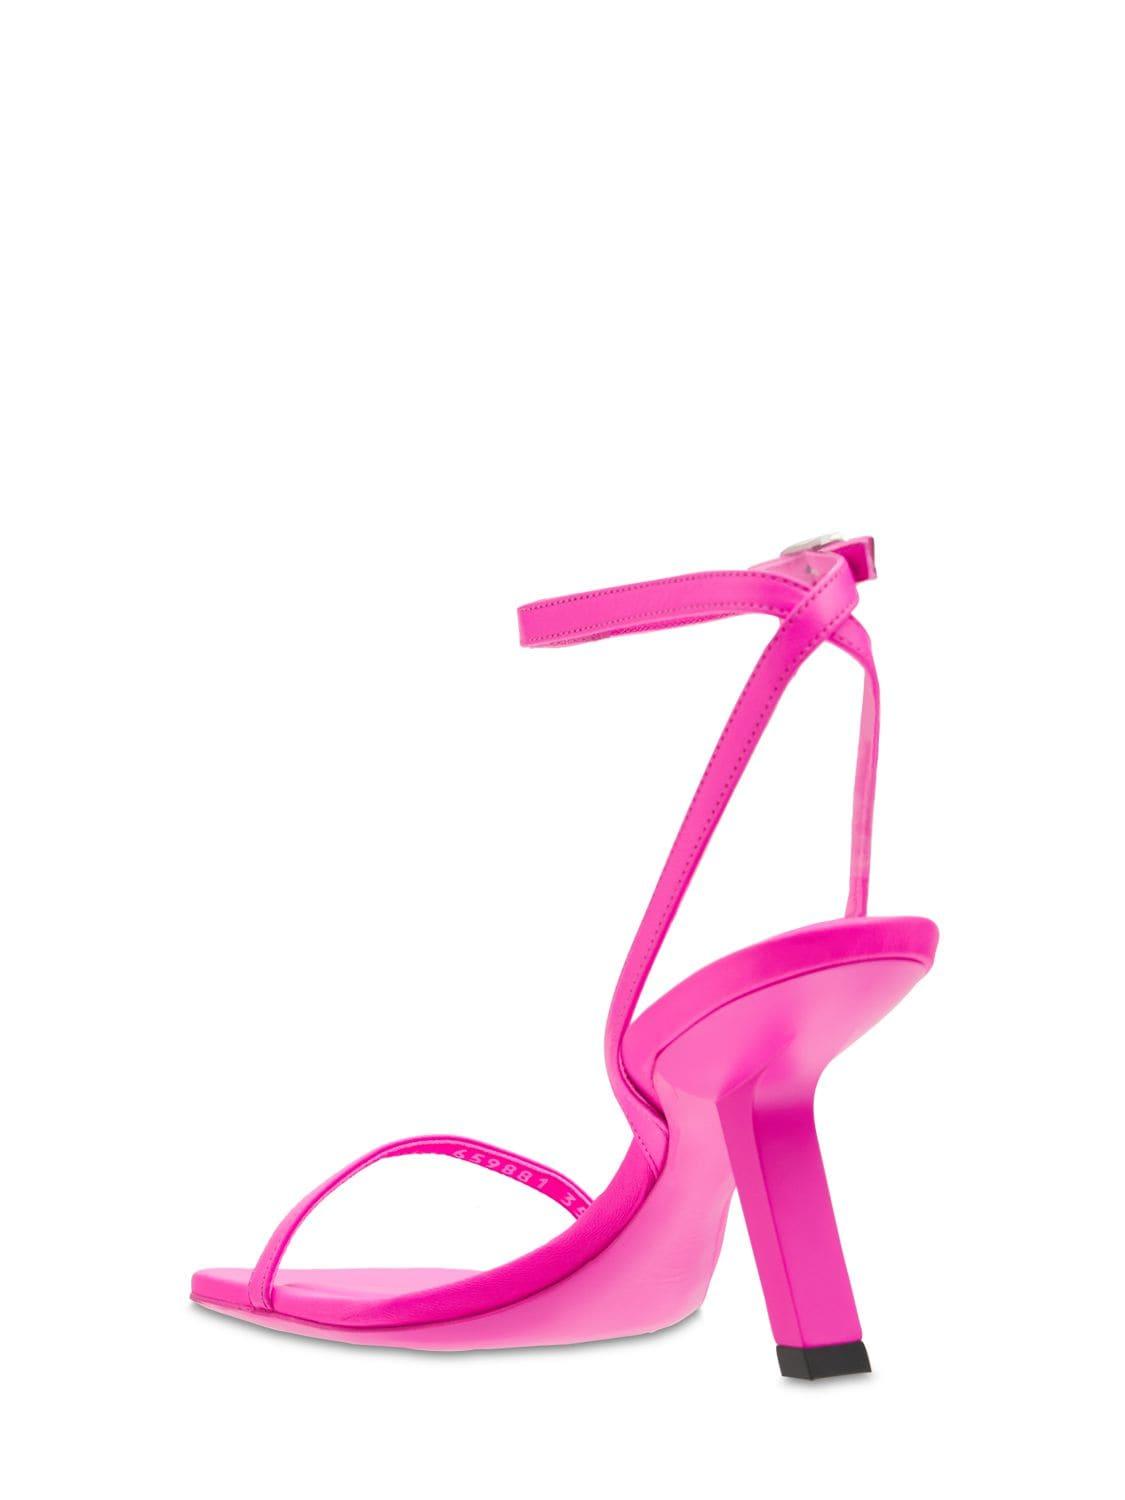 Balenciaga 80mm Void Leather Sandals in Fuchsia (Pink) | Lyst